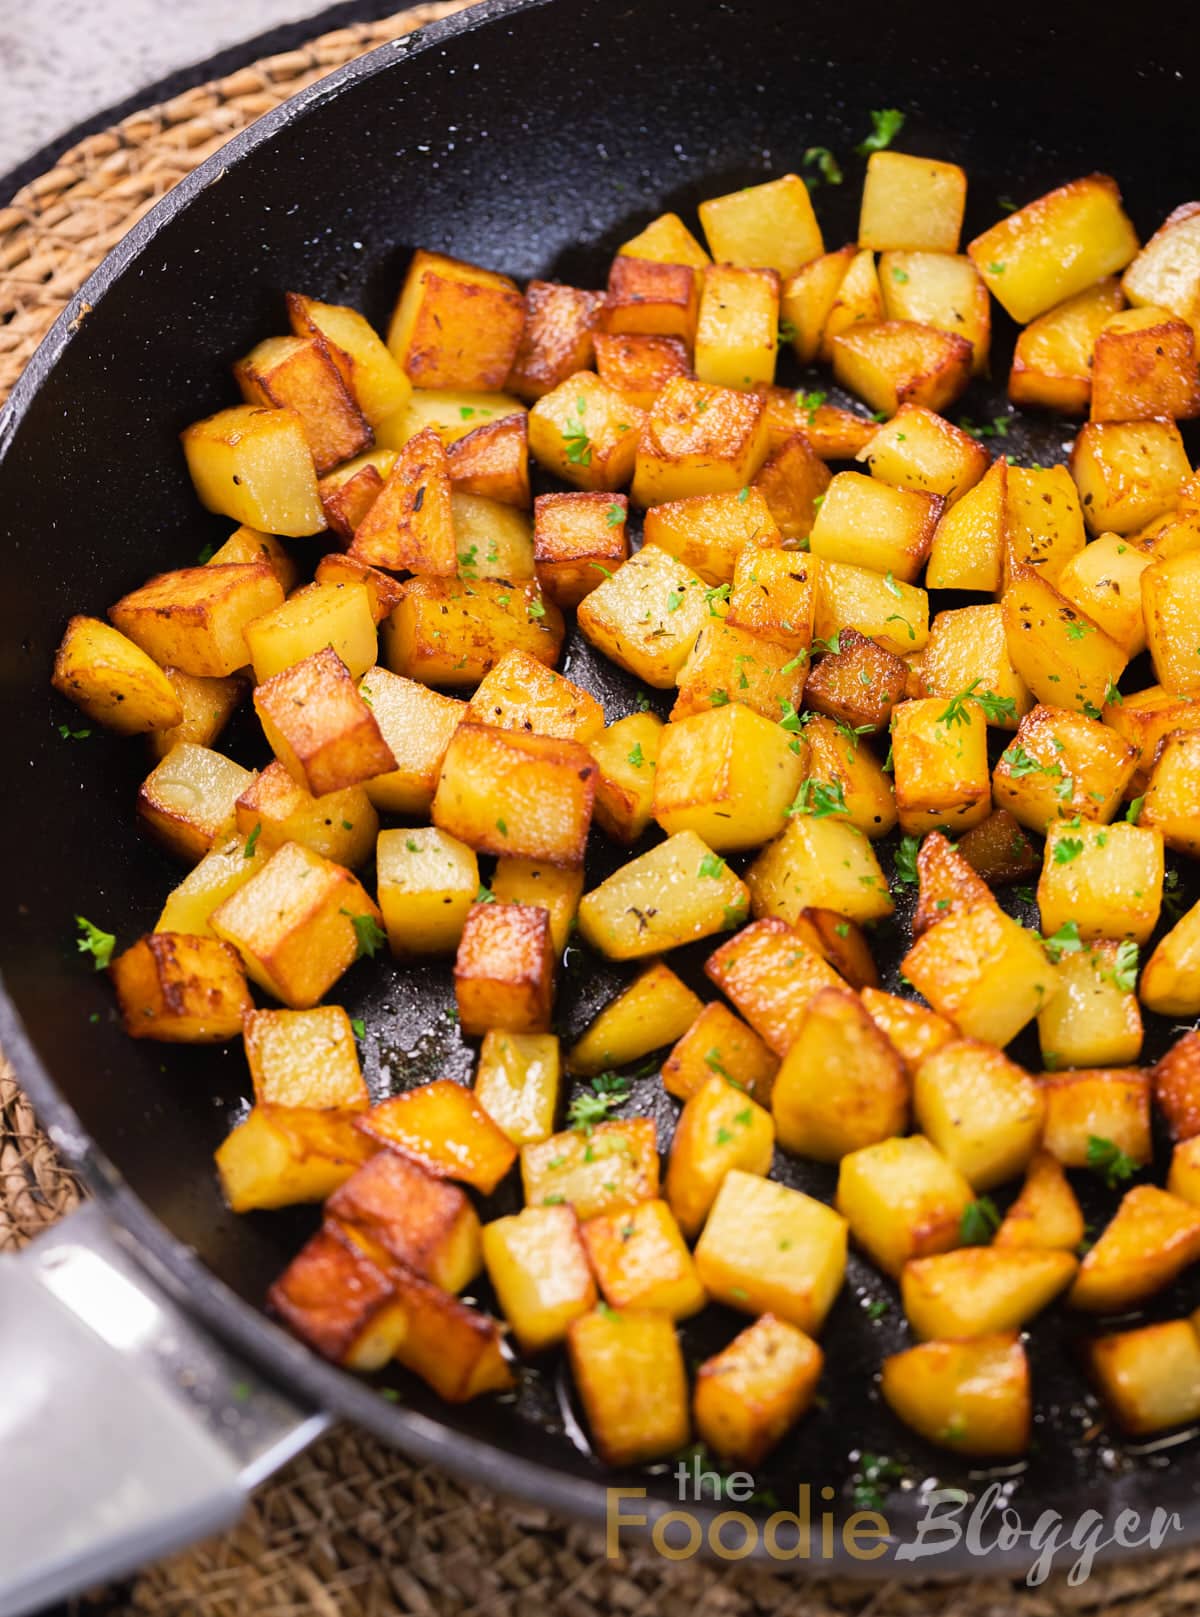 thefoodieblogger how to make breakfast skillet potatoes recipe